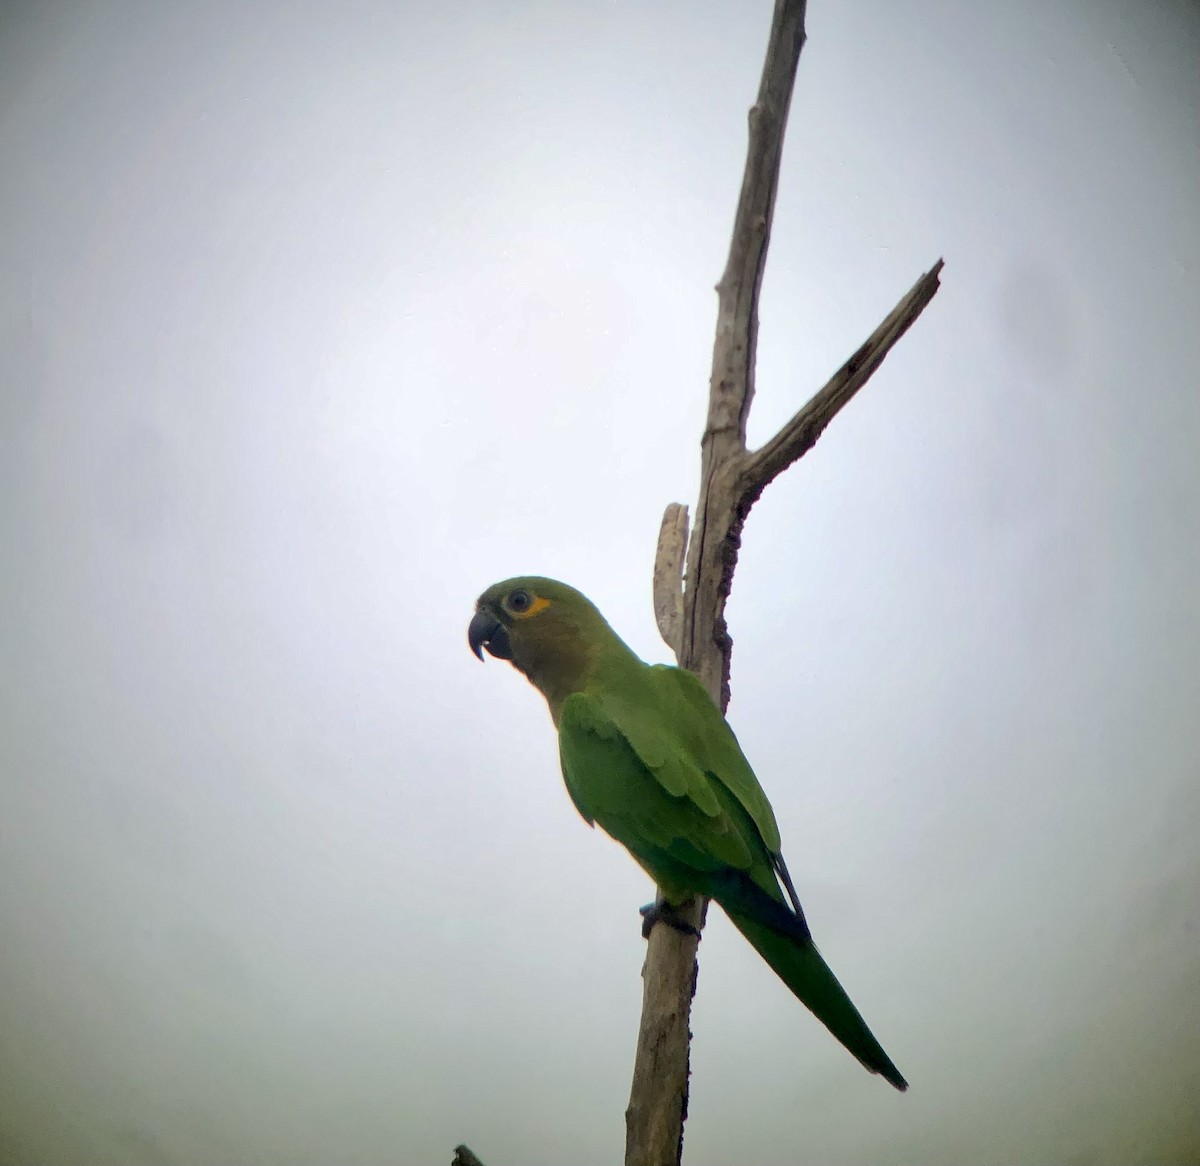 Brown-throated Parakeet (Veraguas) - Rogers "Caribbean Naturalist" Morales